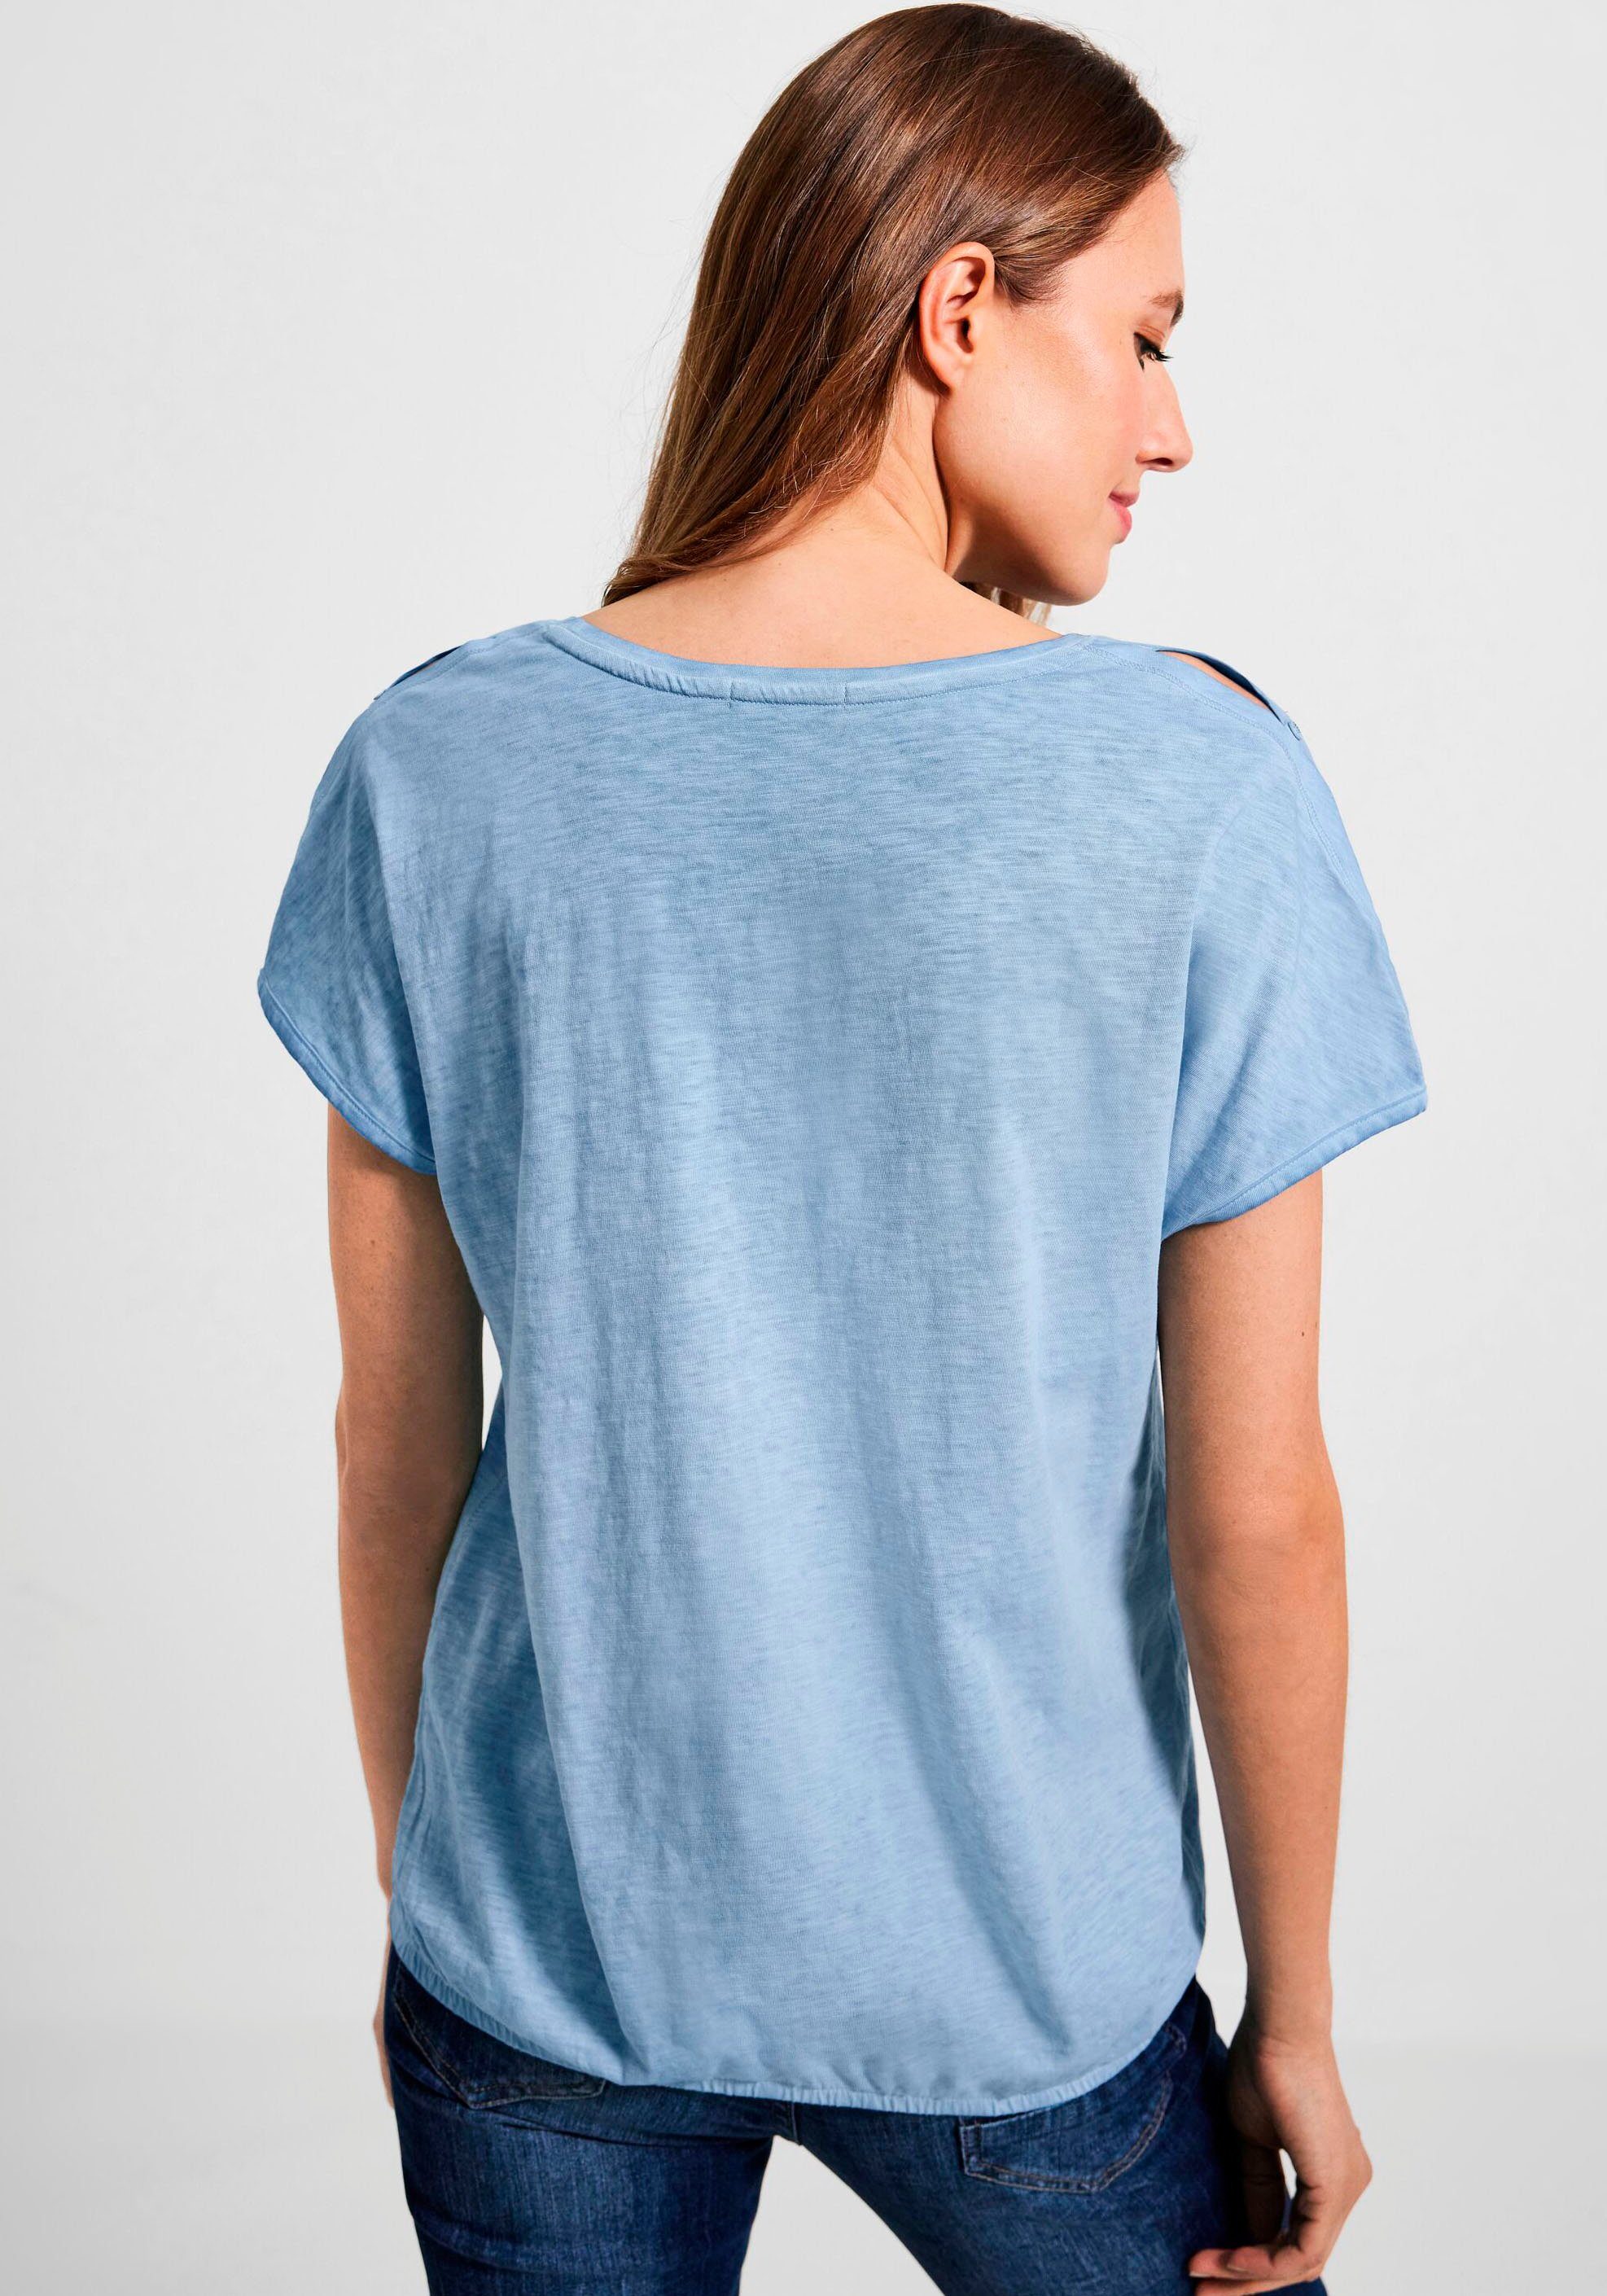 Cecil T-Shirt Schultern den an himmelblau Cut-Outs mit